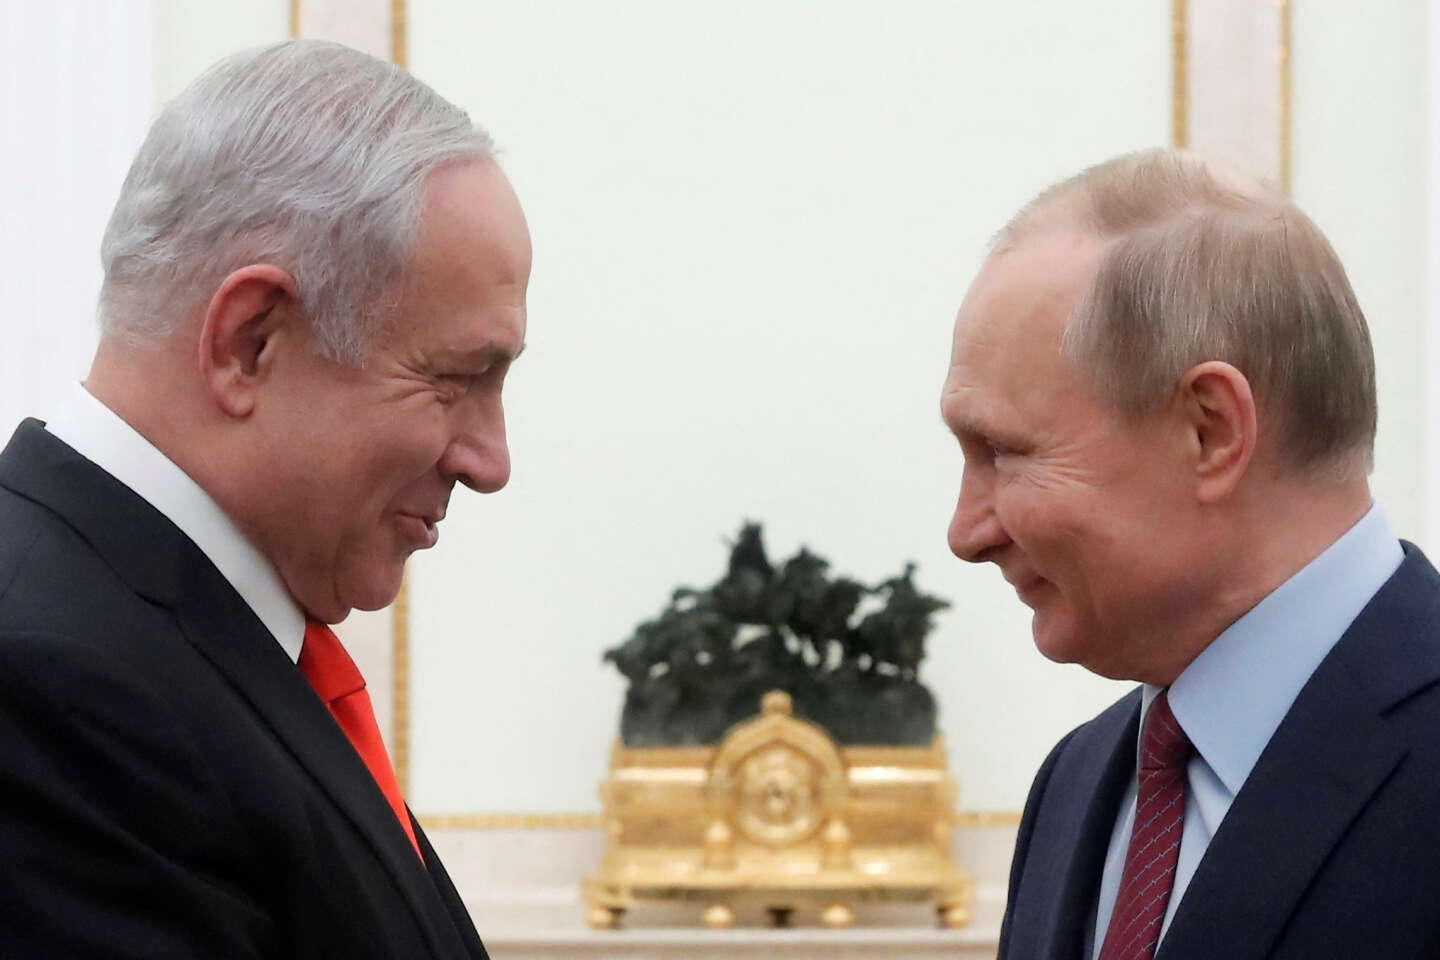 Netanyahu is closer to Putin than to Biden